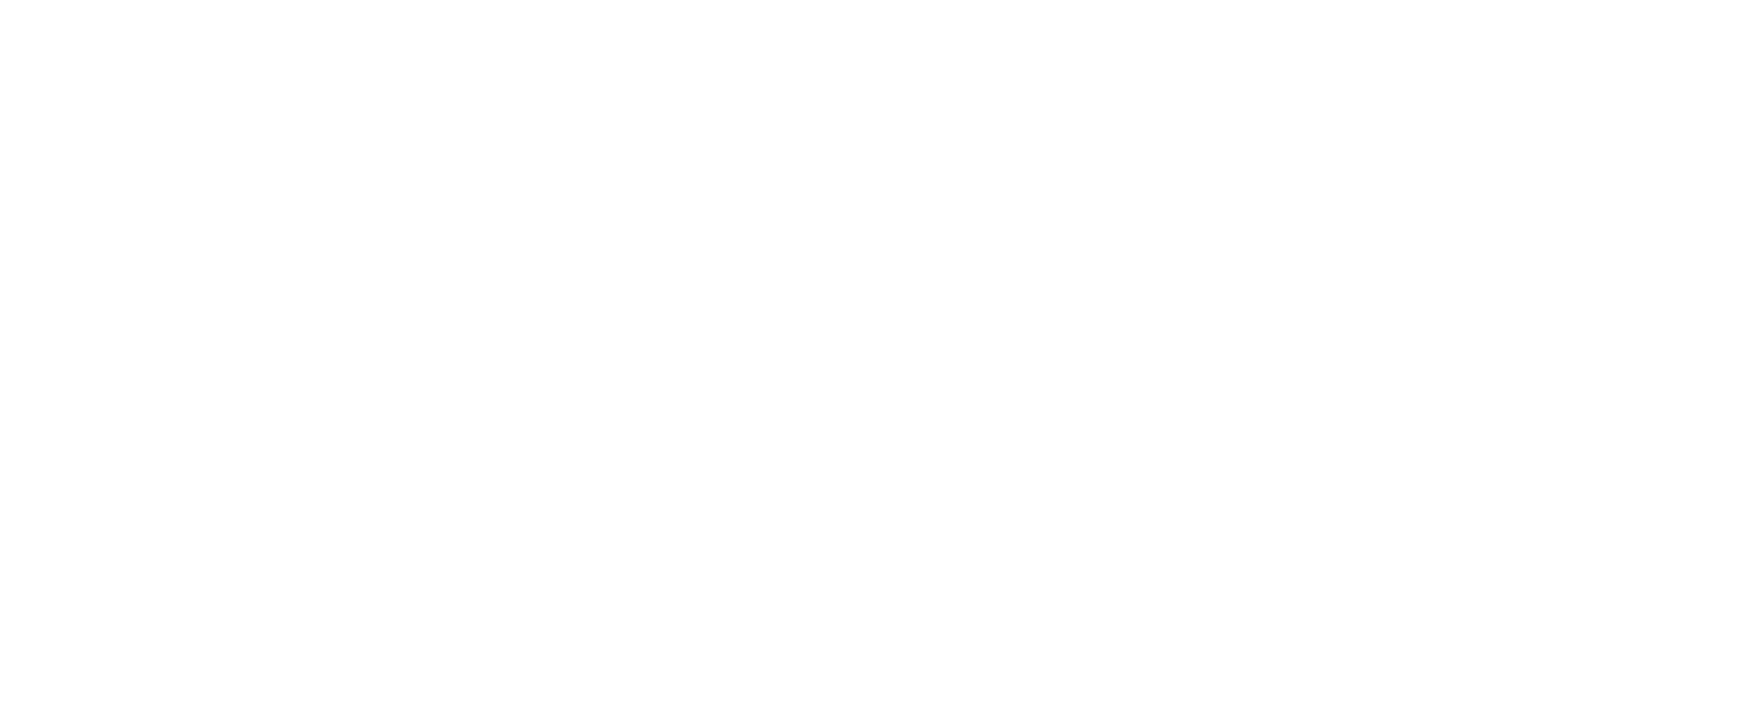 Koenigsegg new horizontal logo